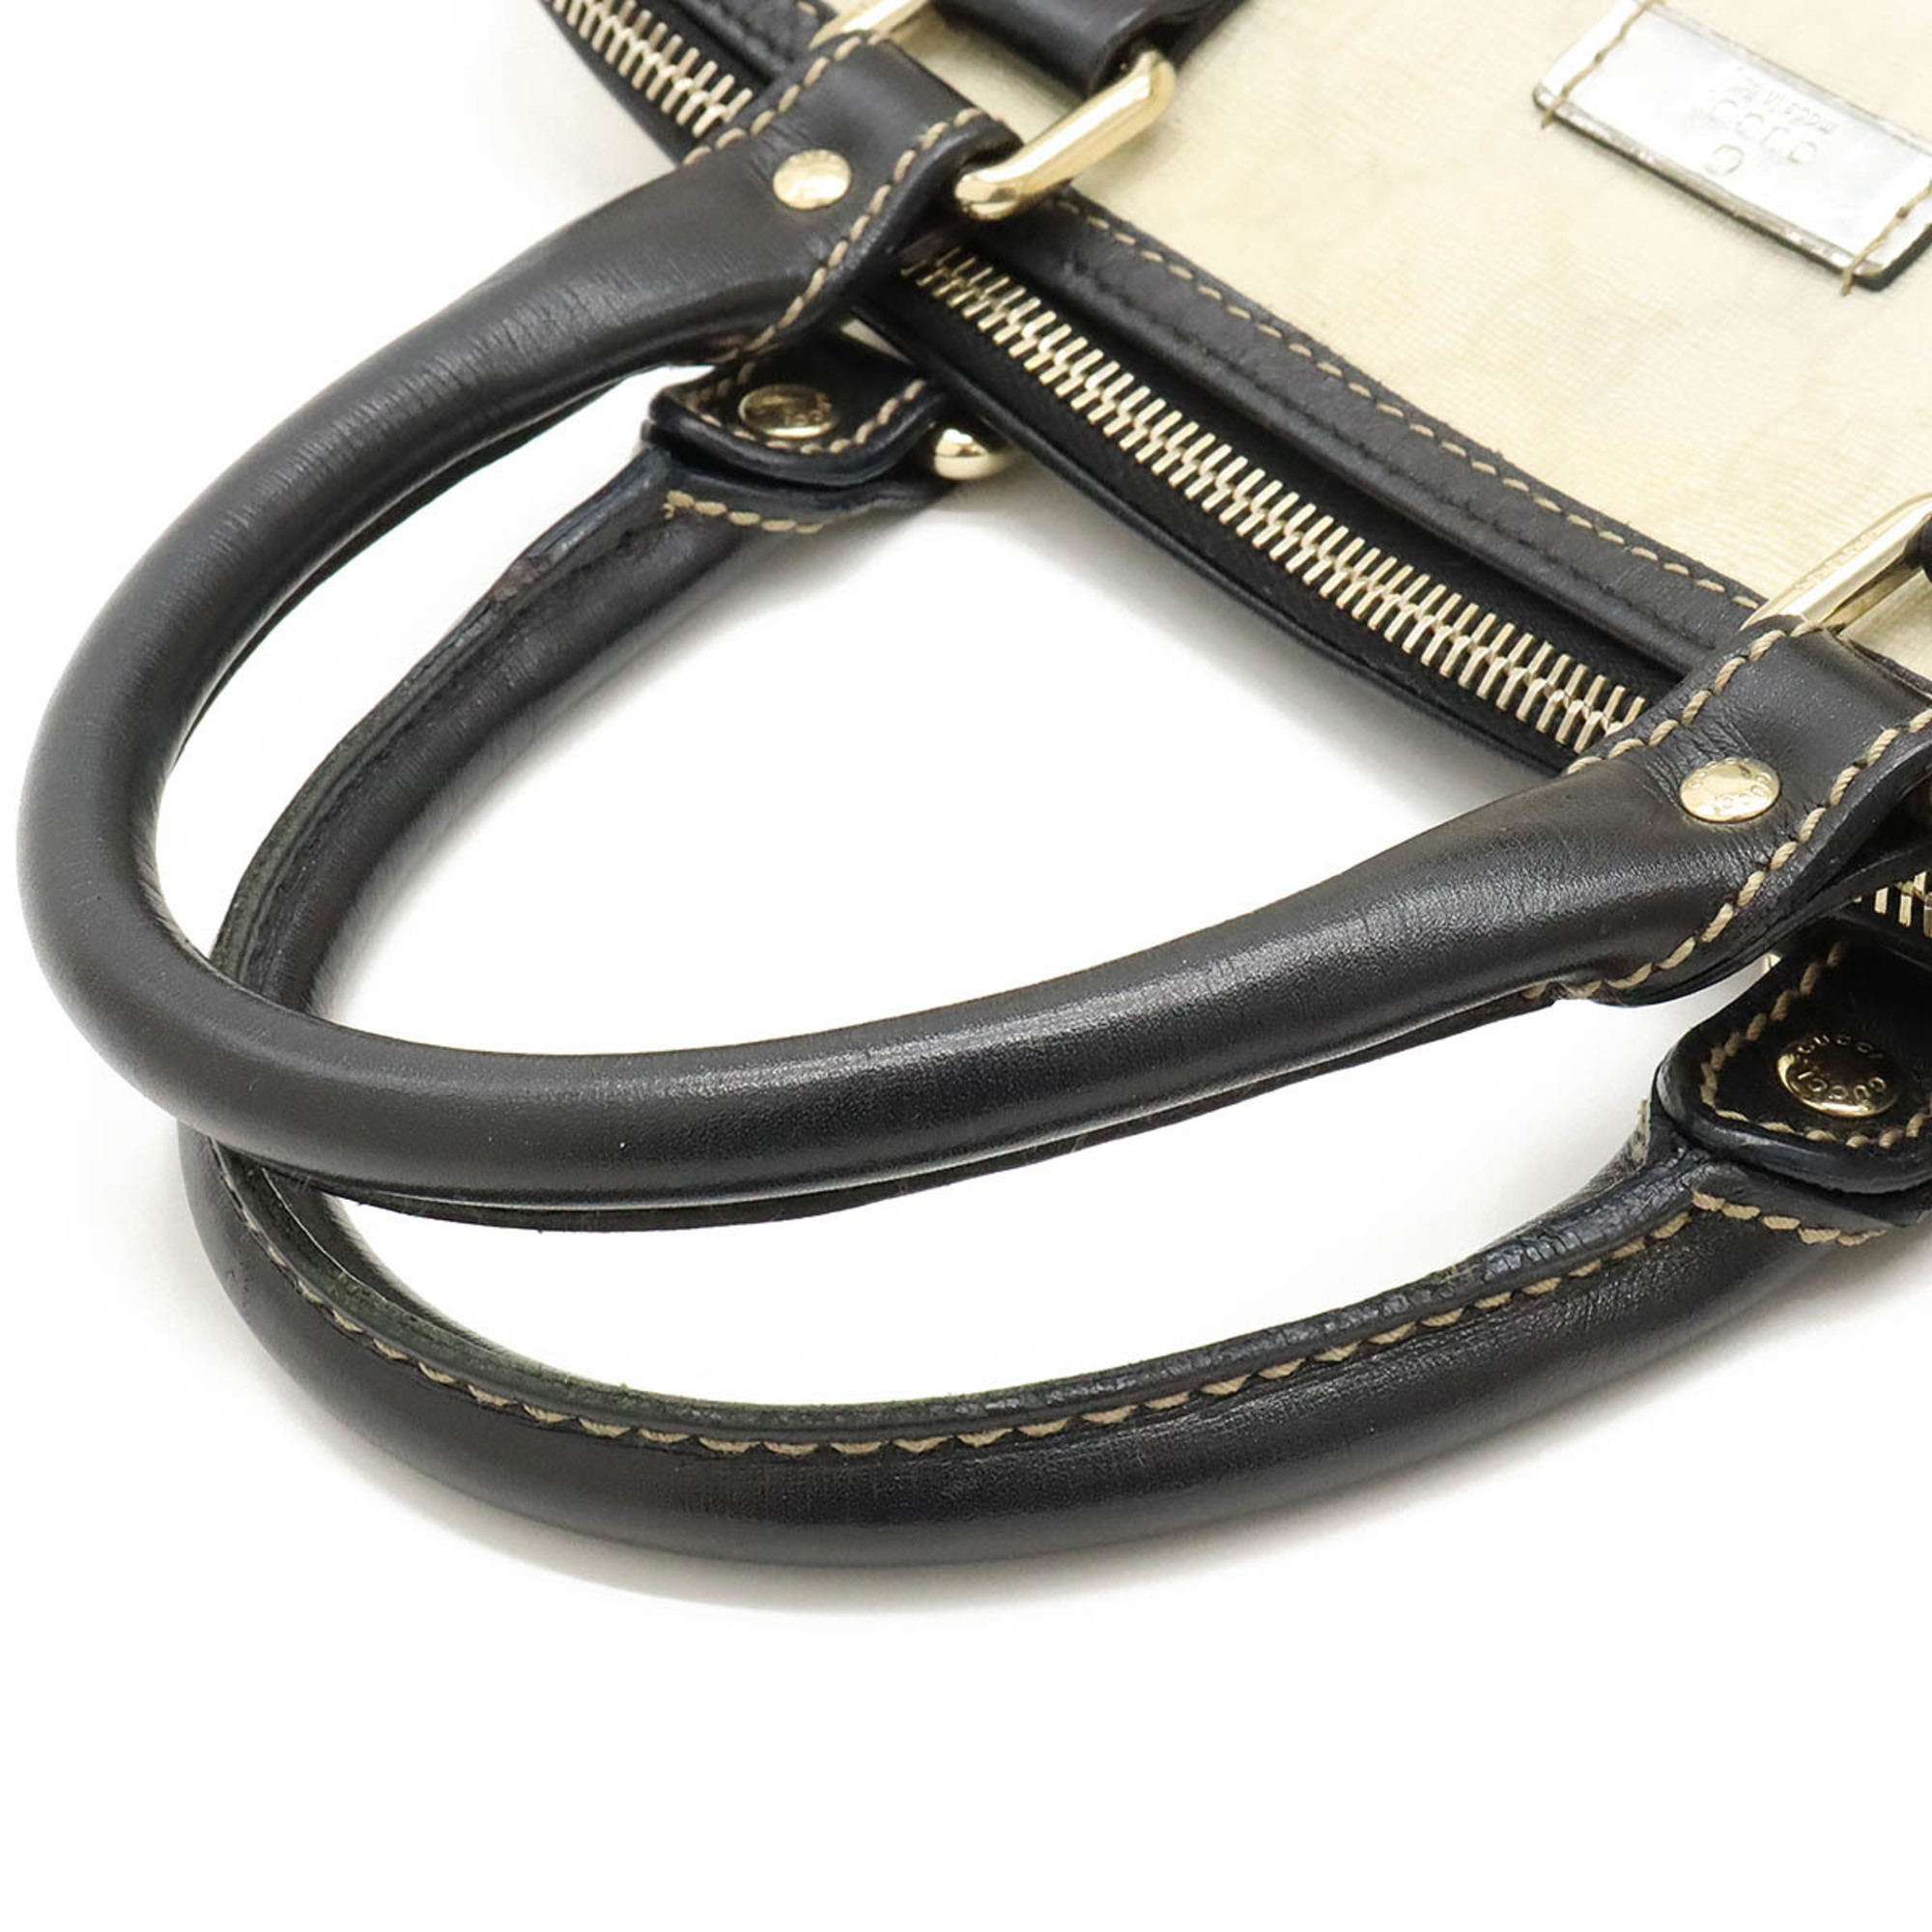 GUCCI GG Supreme Handbag Boston Bag PVC Leather Ivory Black Limited Edition 193603